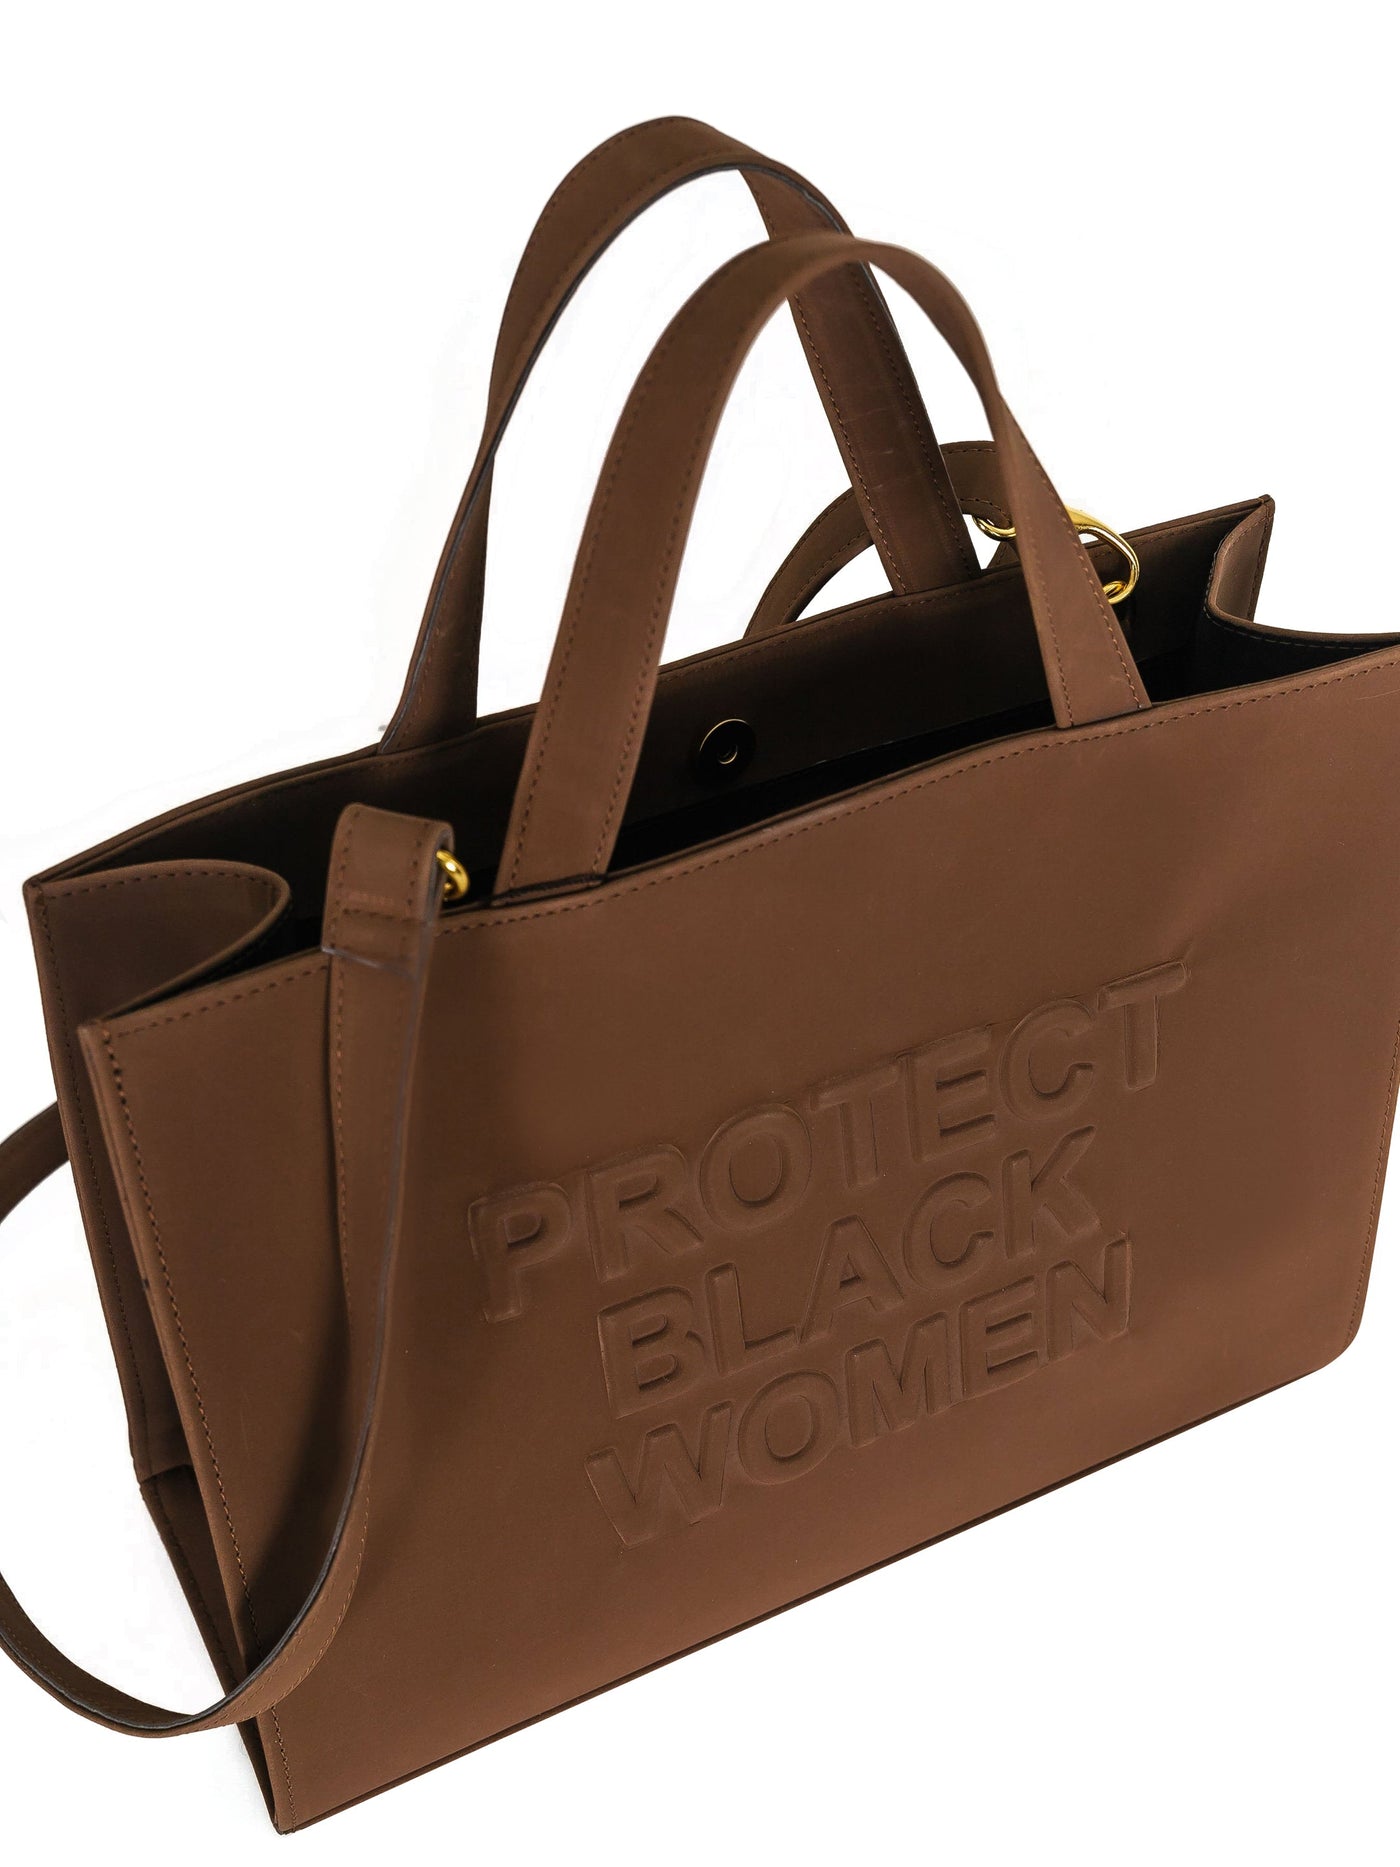 PBW - Vegan Leather Bag (Cherry Blossom) | CISE